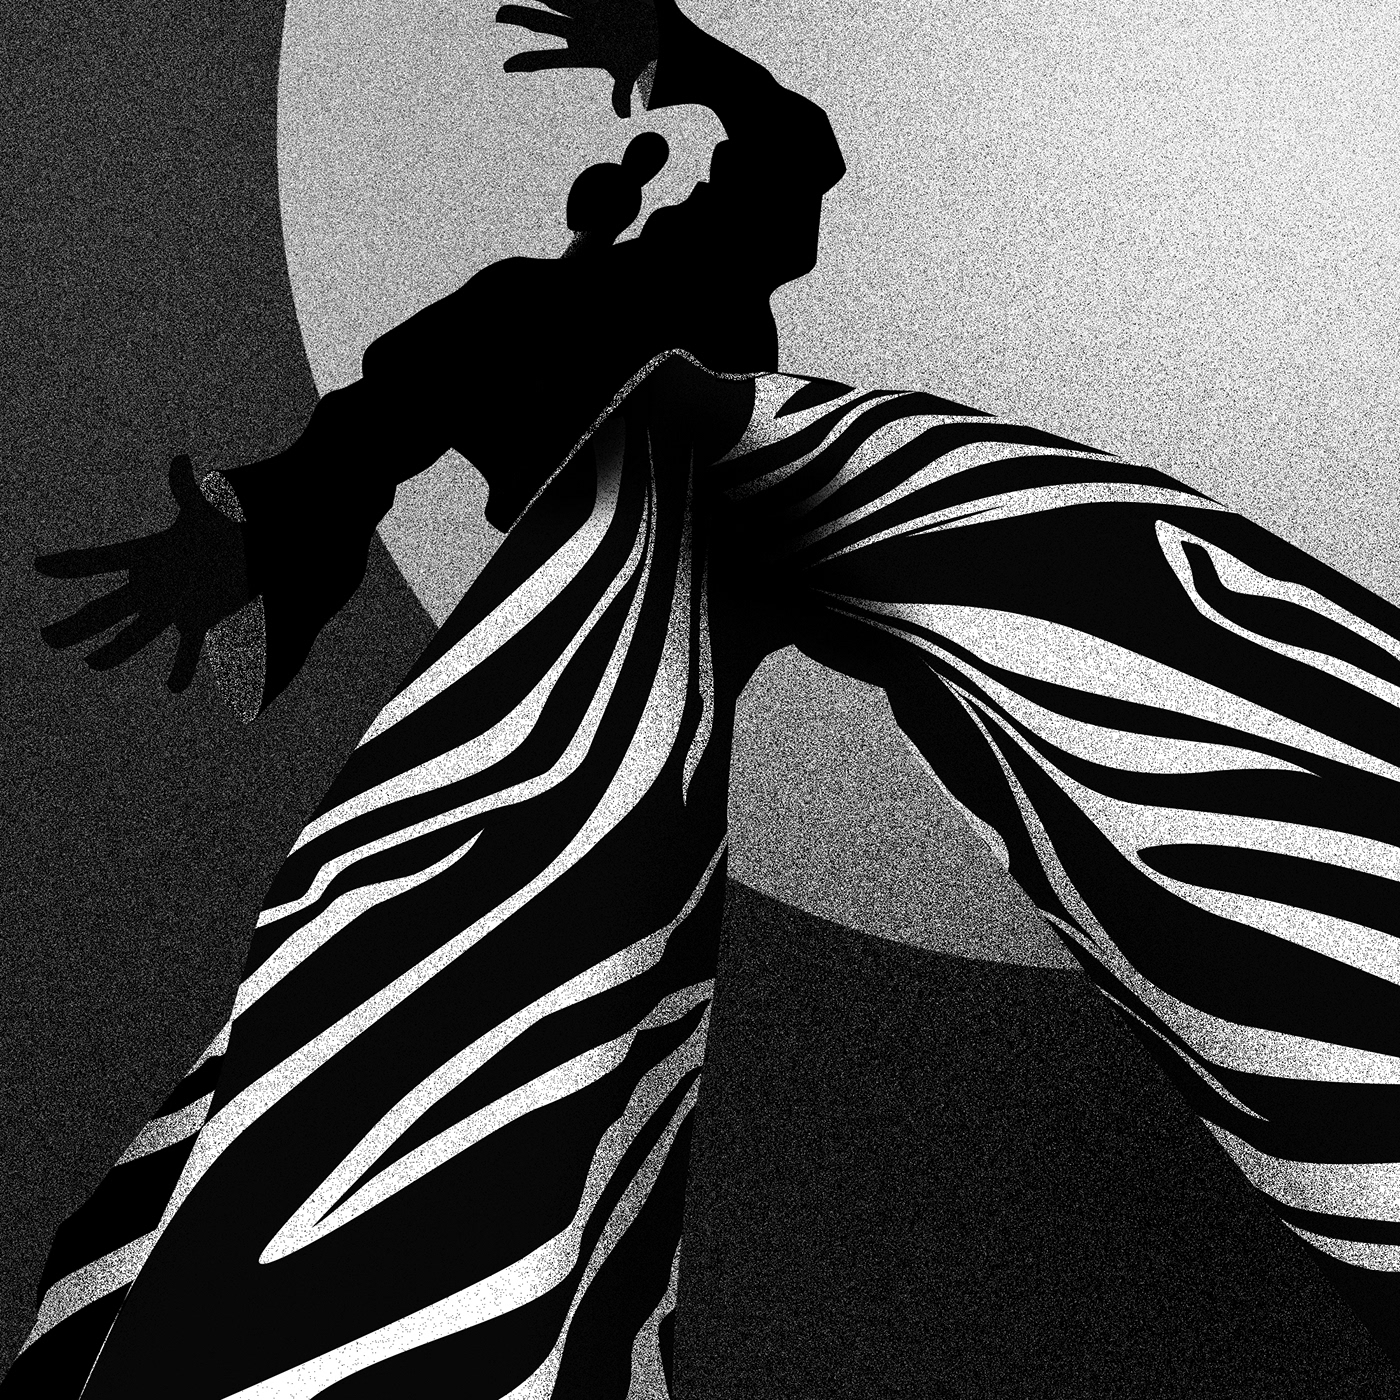 black and white Black and White Art dancing movement Dynamic zebra space art futuristic music cover art Black and white fashion